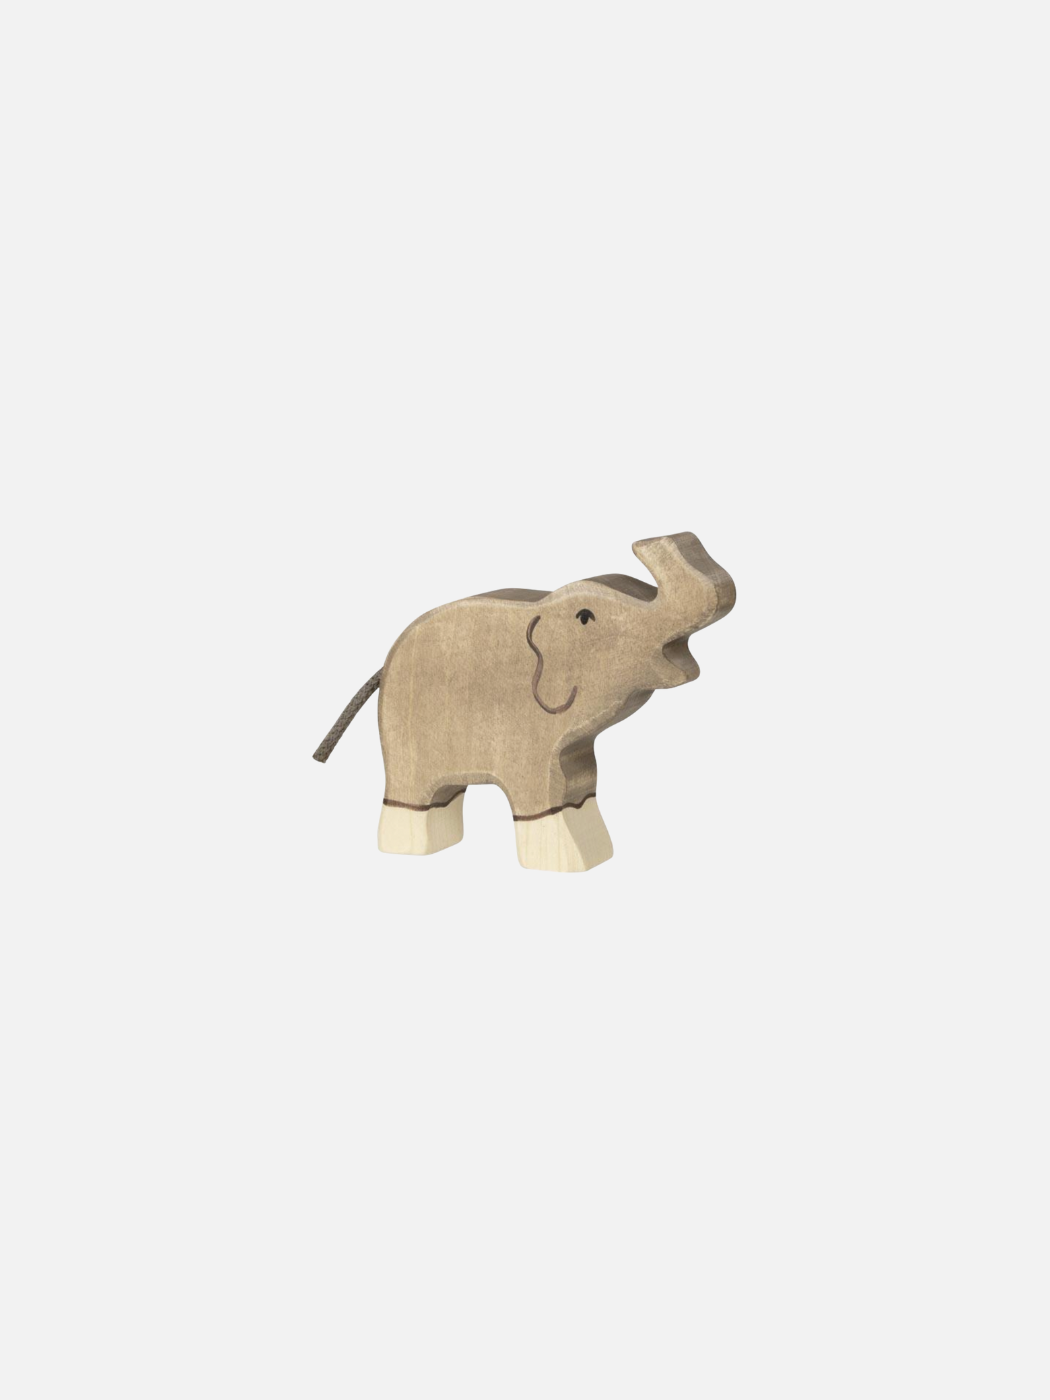 Wooden Elephant Calf